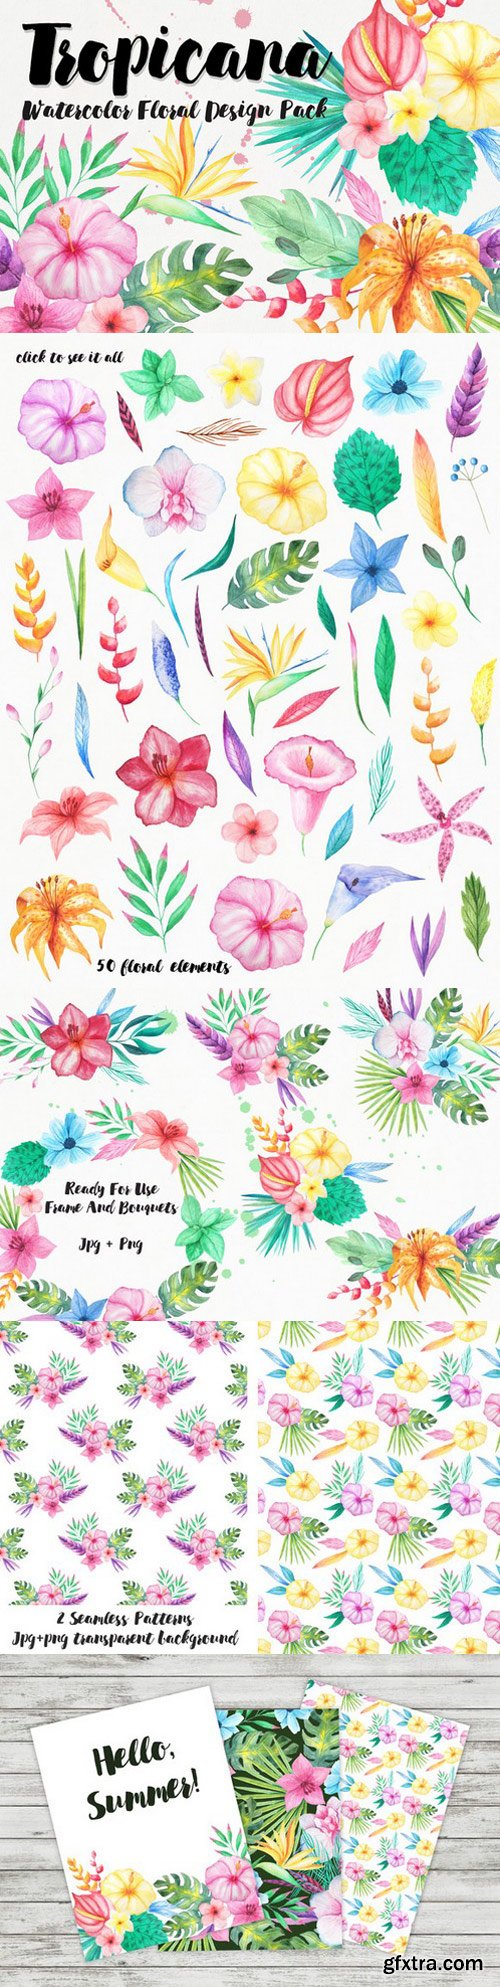 CM - Watercolor Tropical Floral Pack 719315